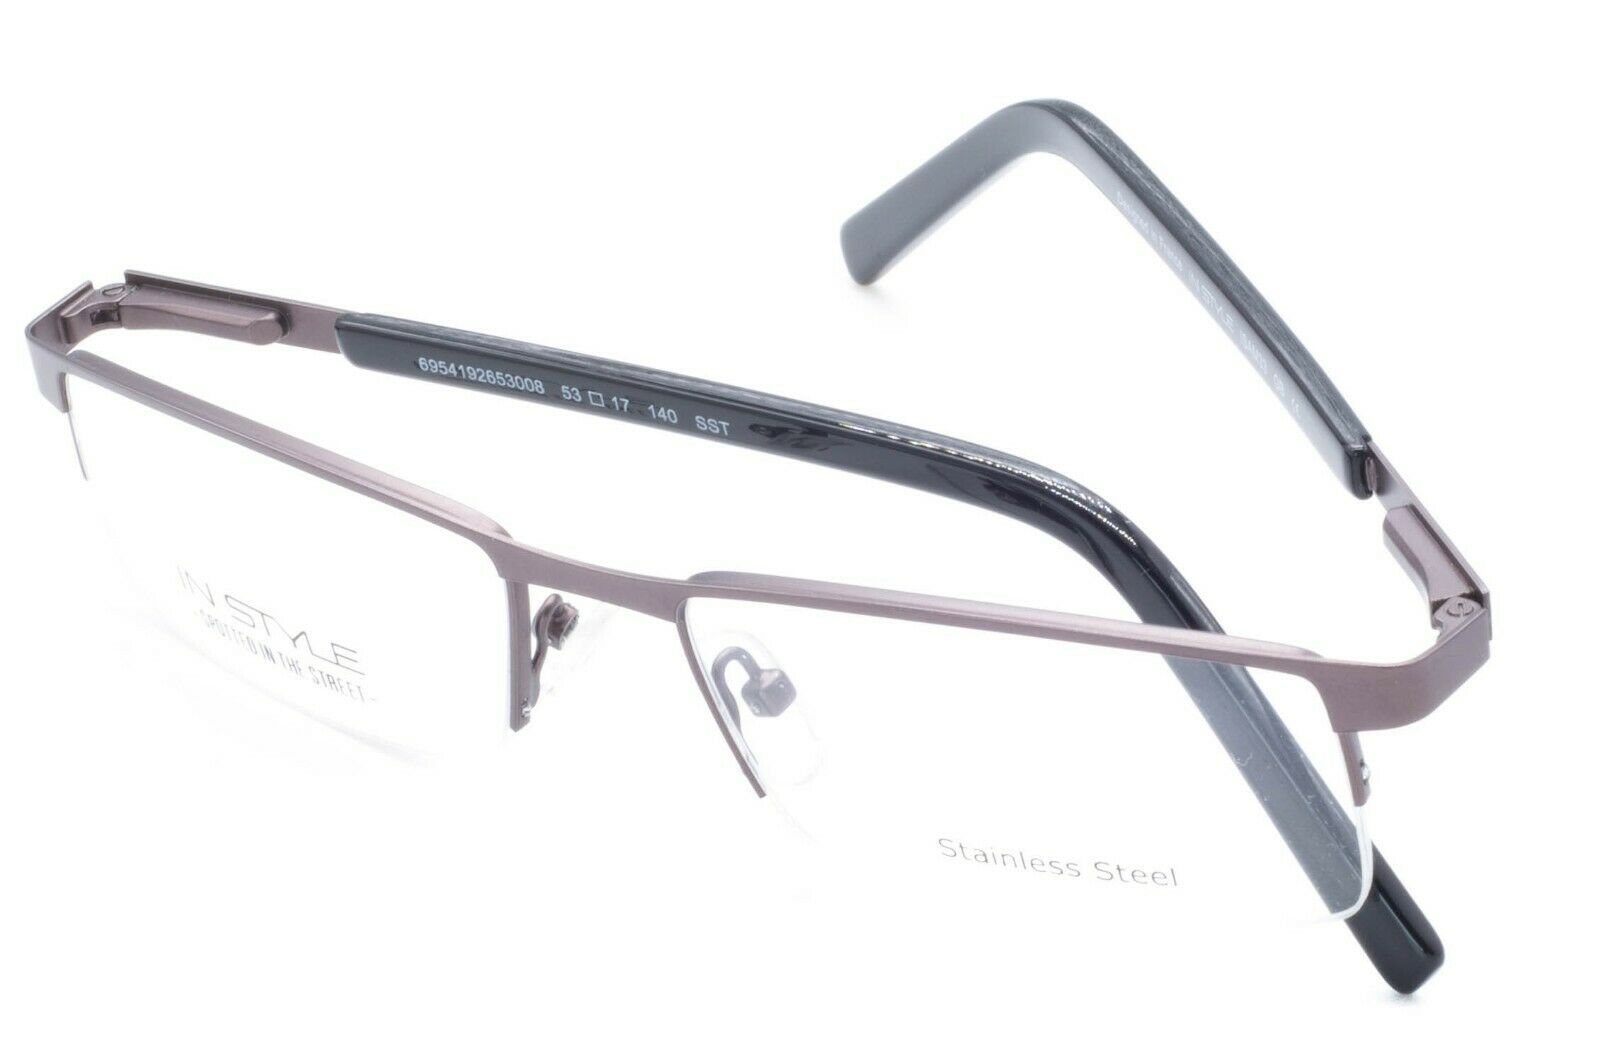 IN STYLE ISAM33 GB 53mm Eyewear FRAMES Glasses RX Optical Eyeglasses New TRUSTED